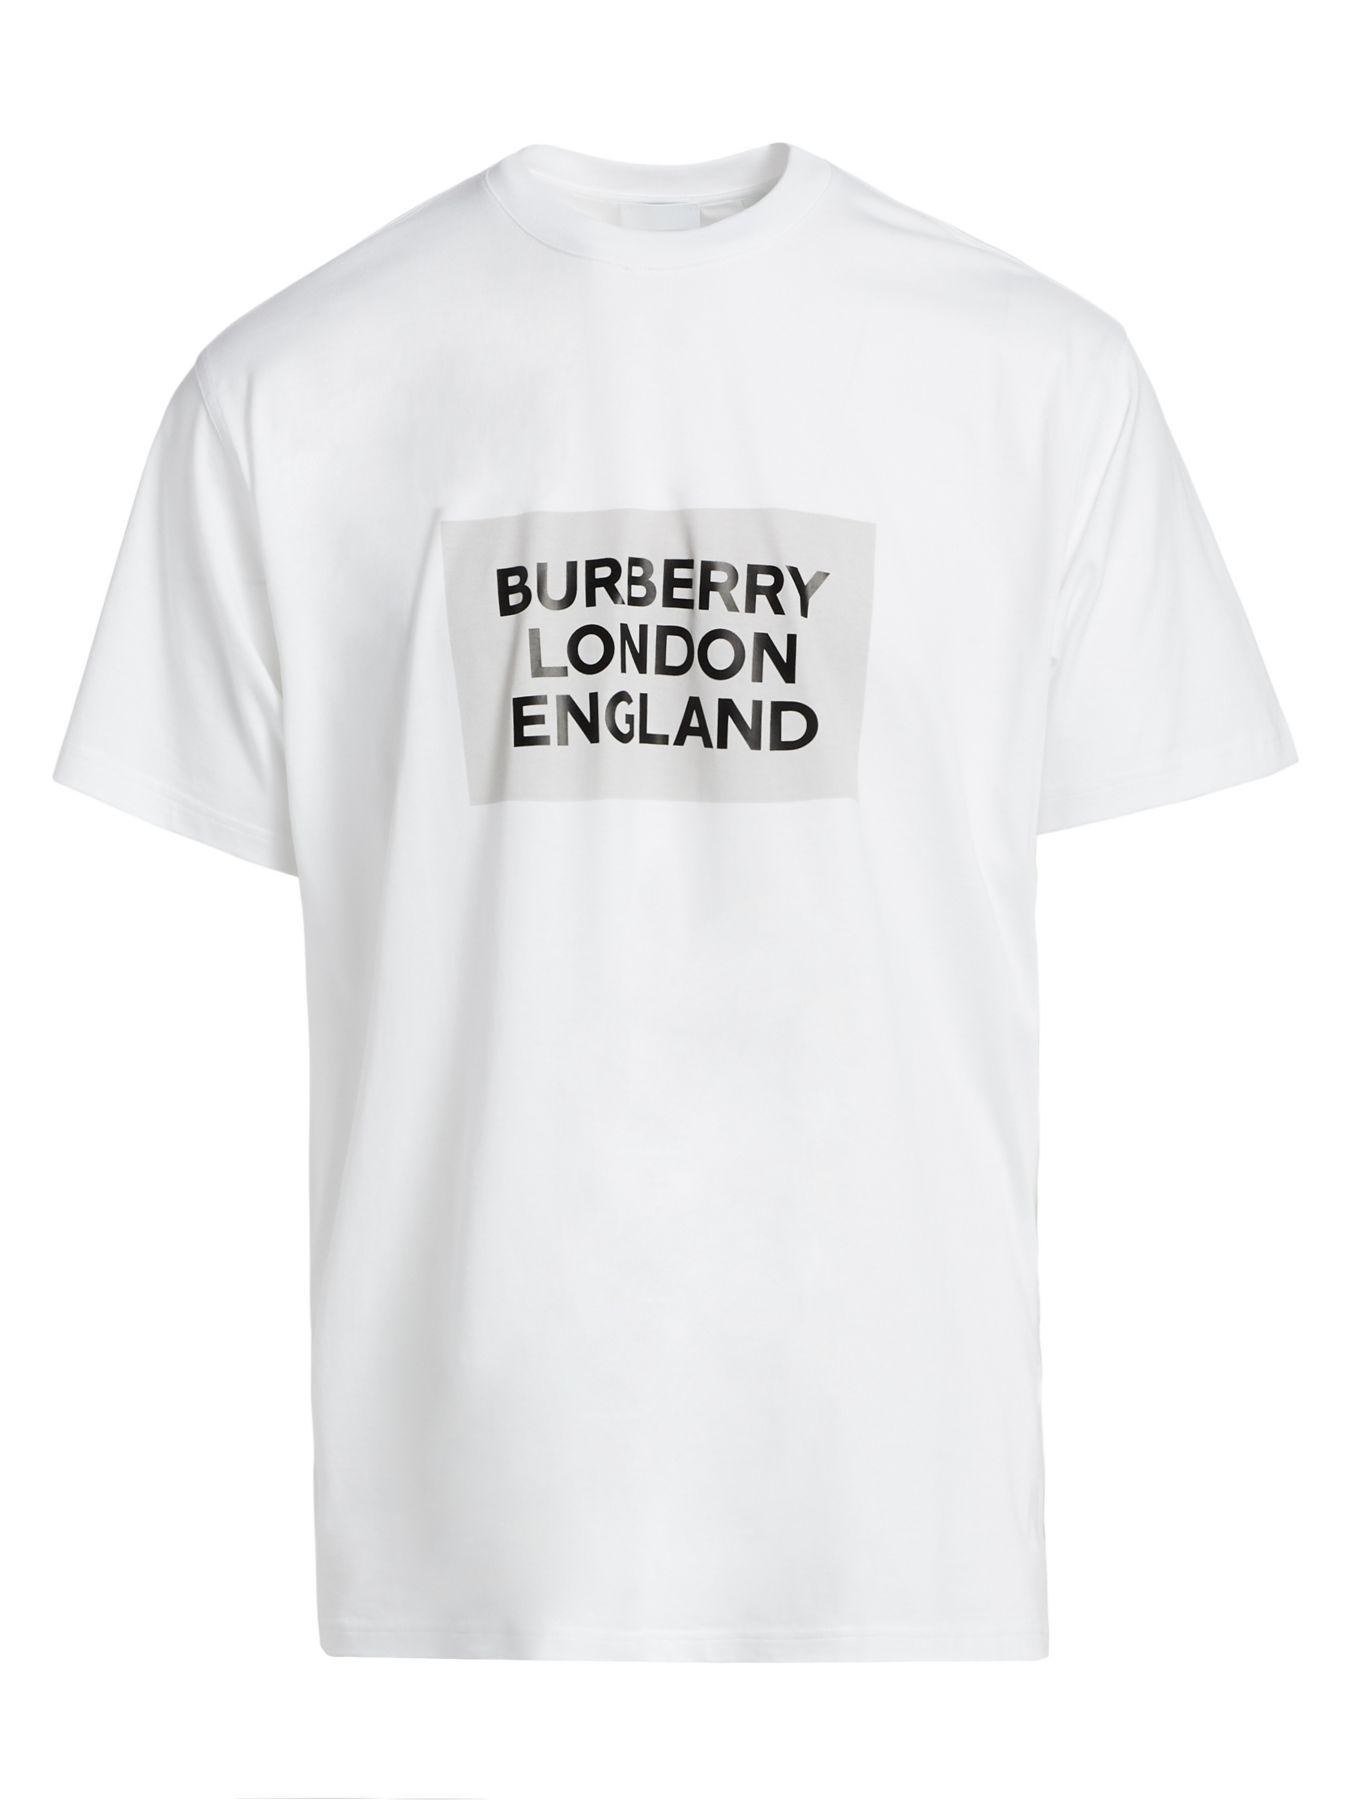 Actualizar 57+ imagen burberry london black shirt - Abzlocal.mx